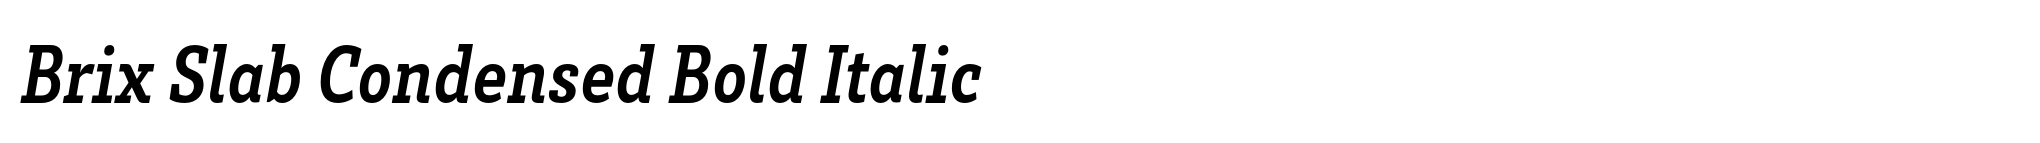 Brix Slab Condensed Bold Italic image